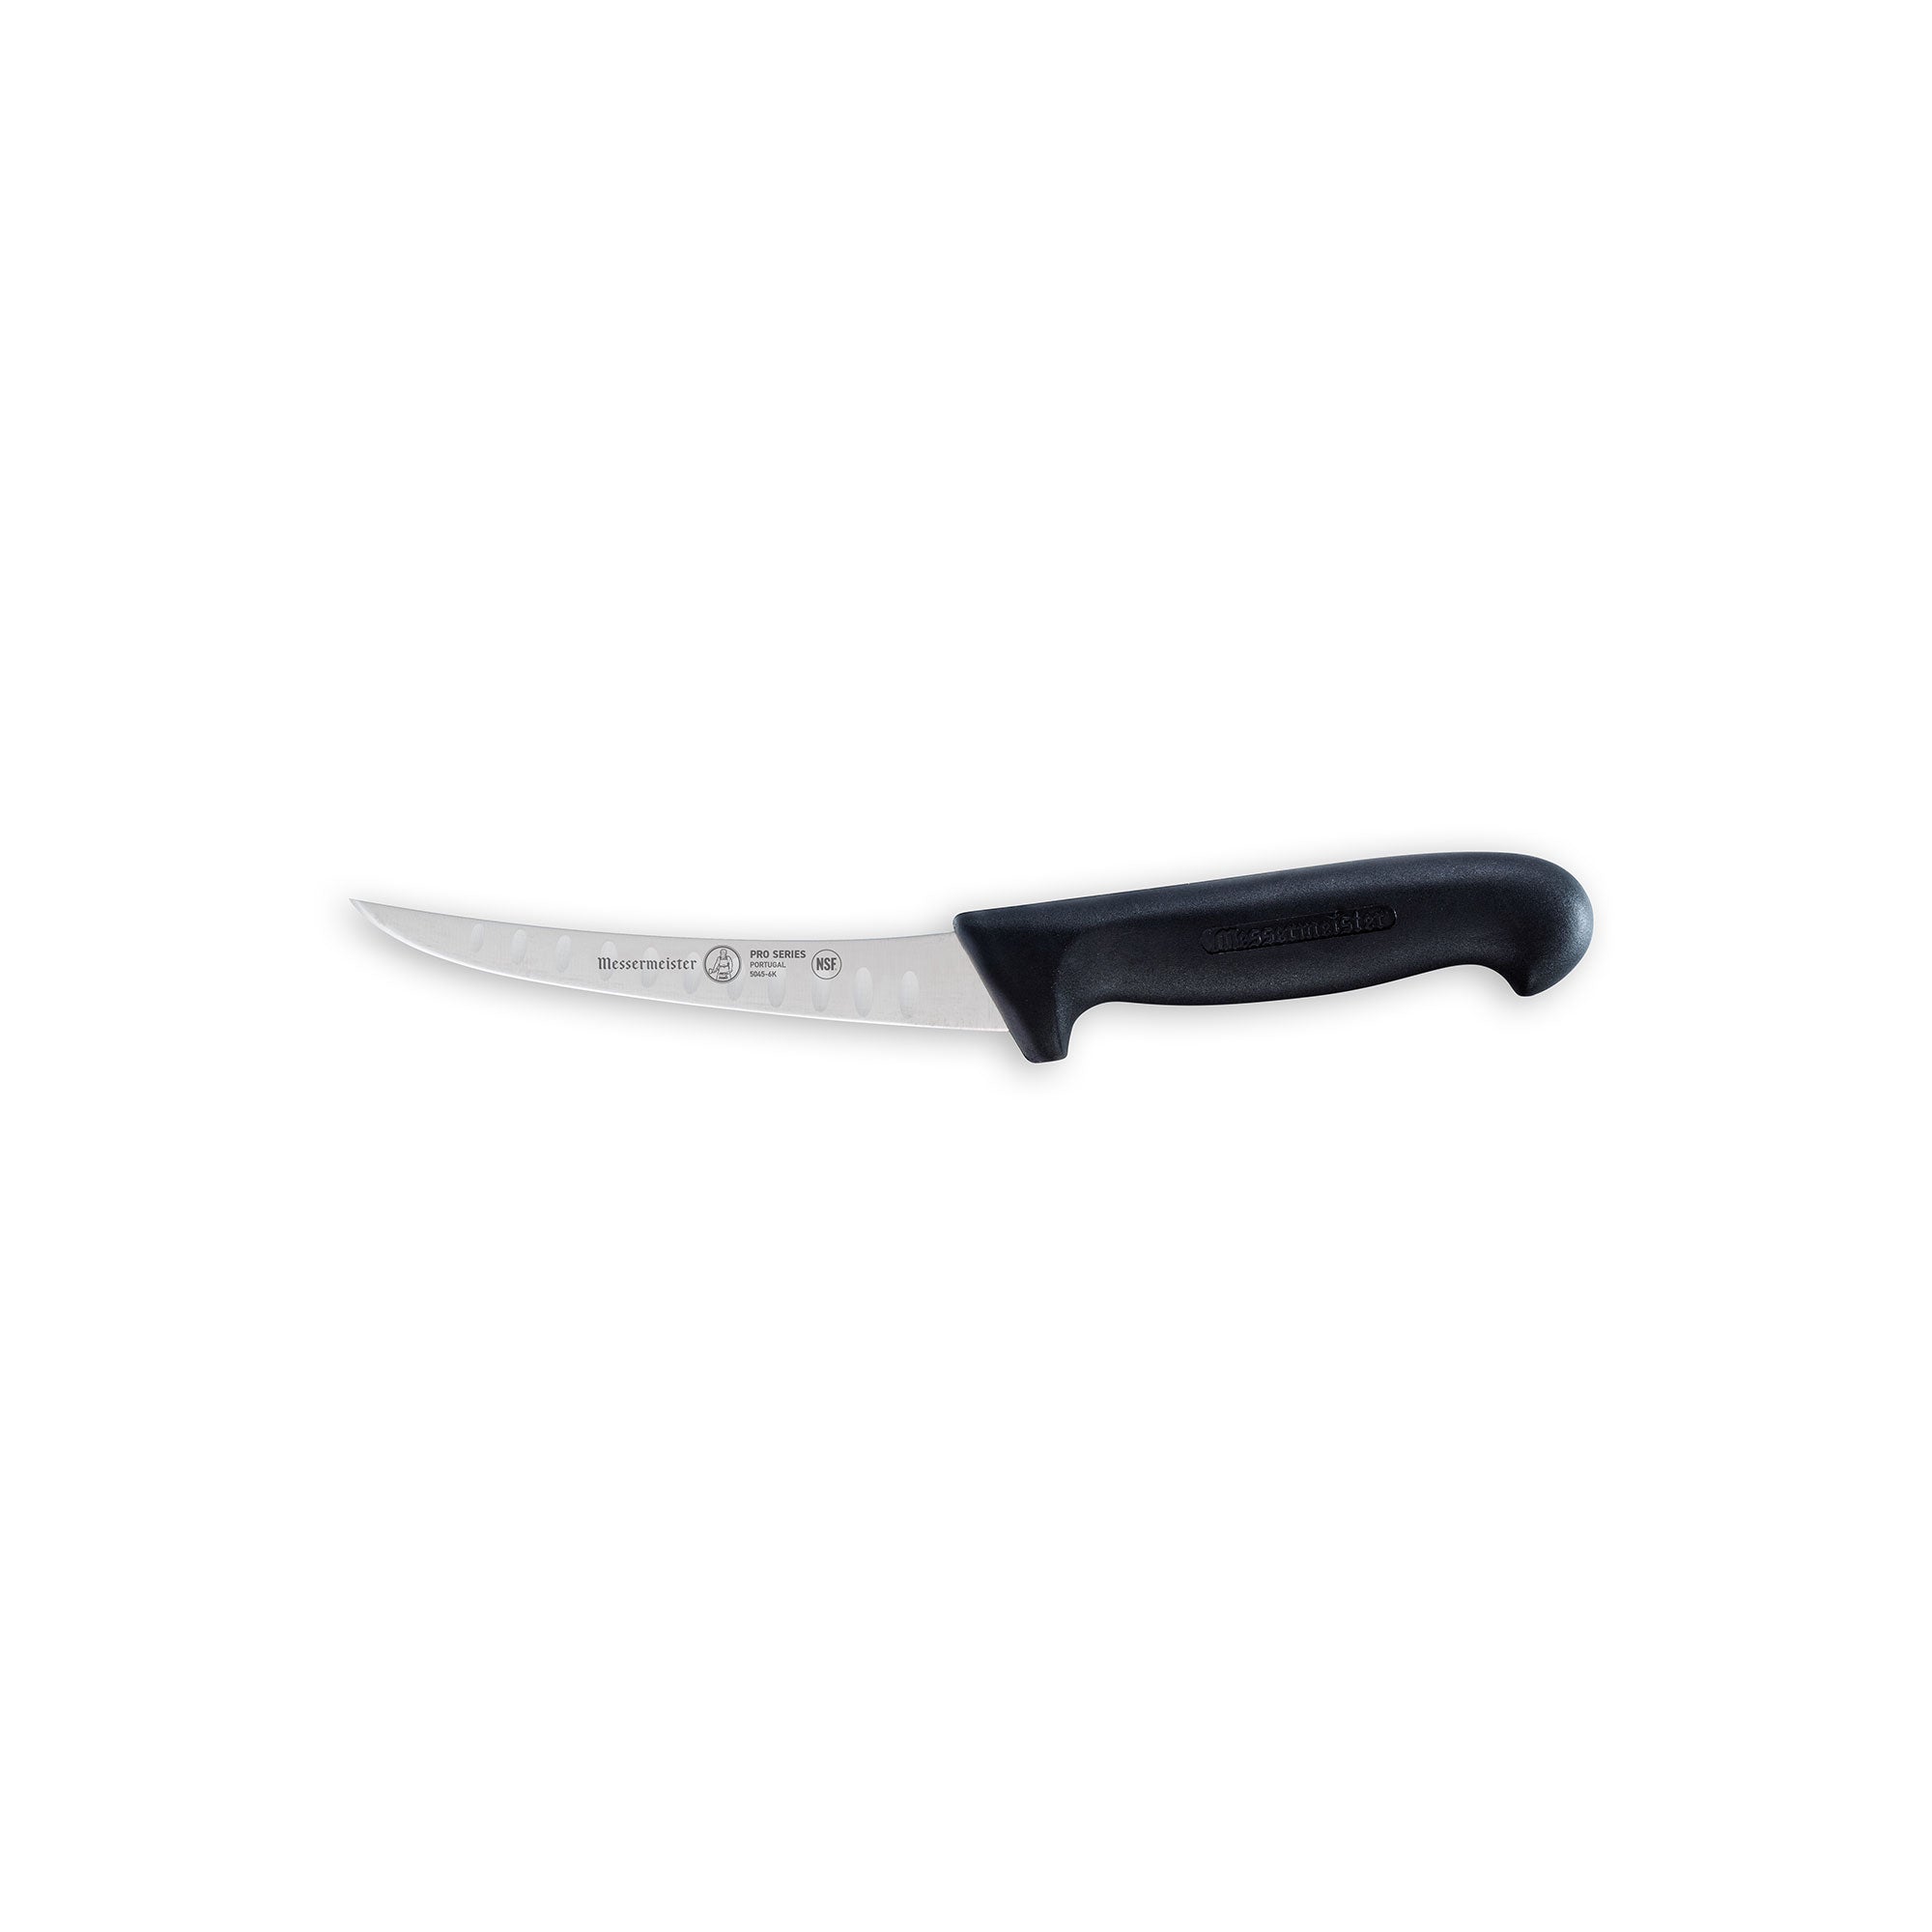 Steelport Introduces 6-Inch Boning Knife